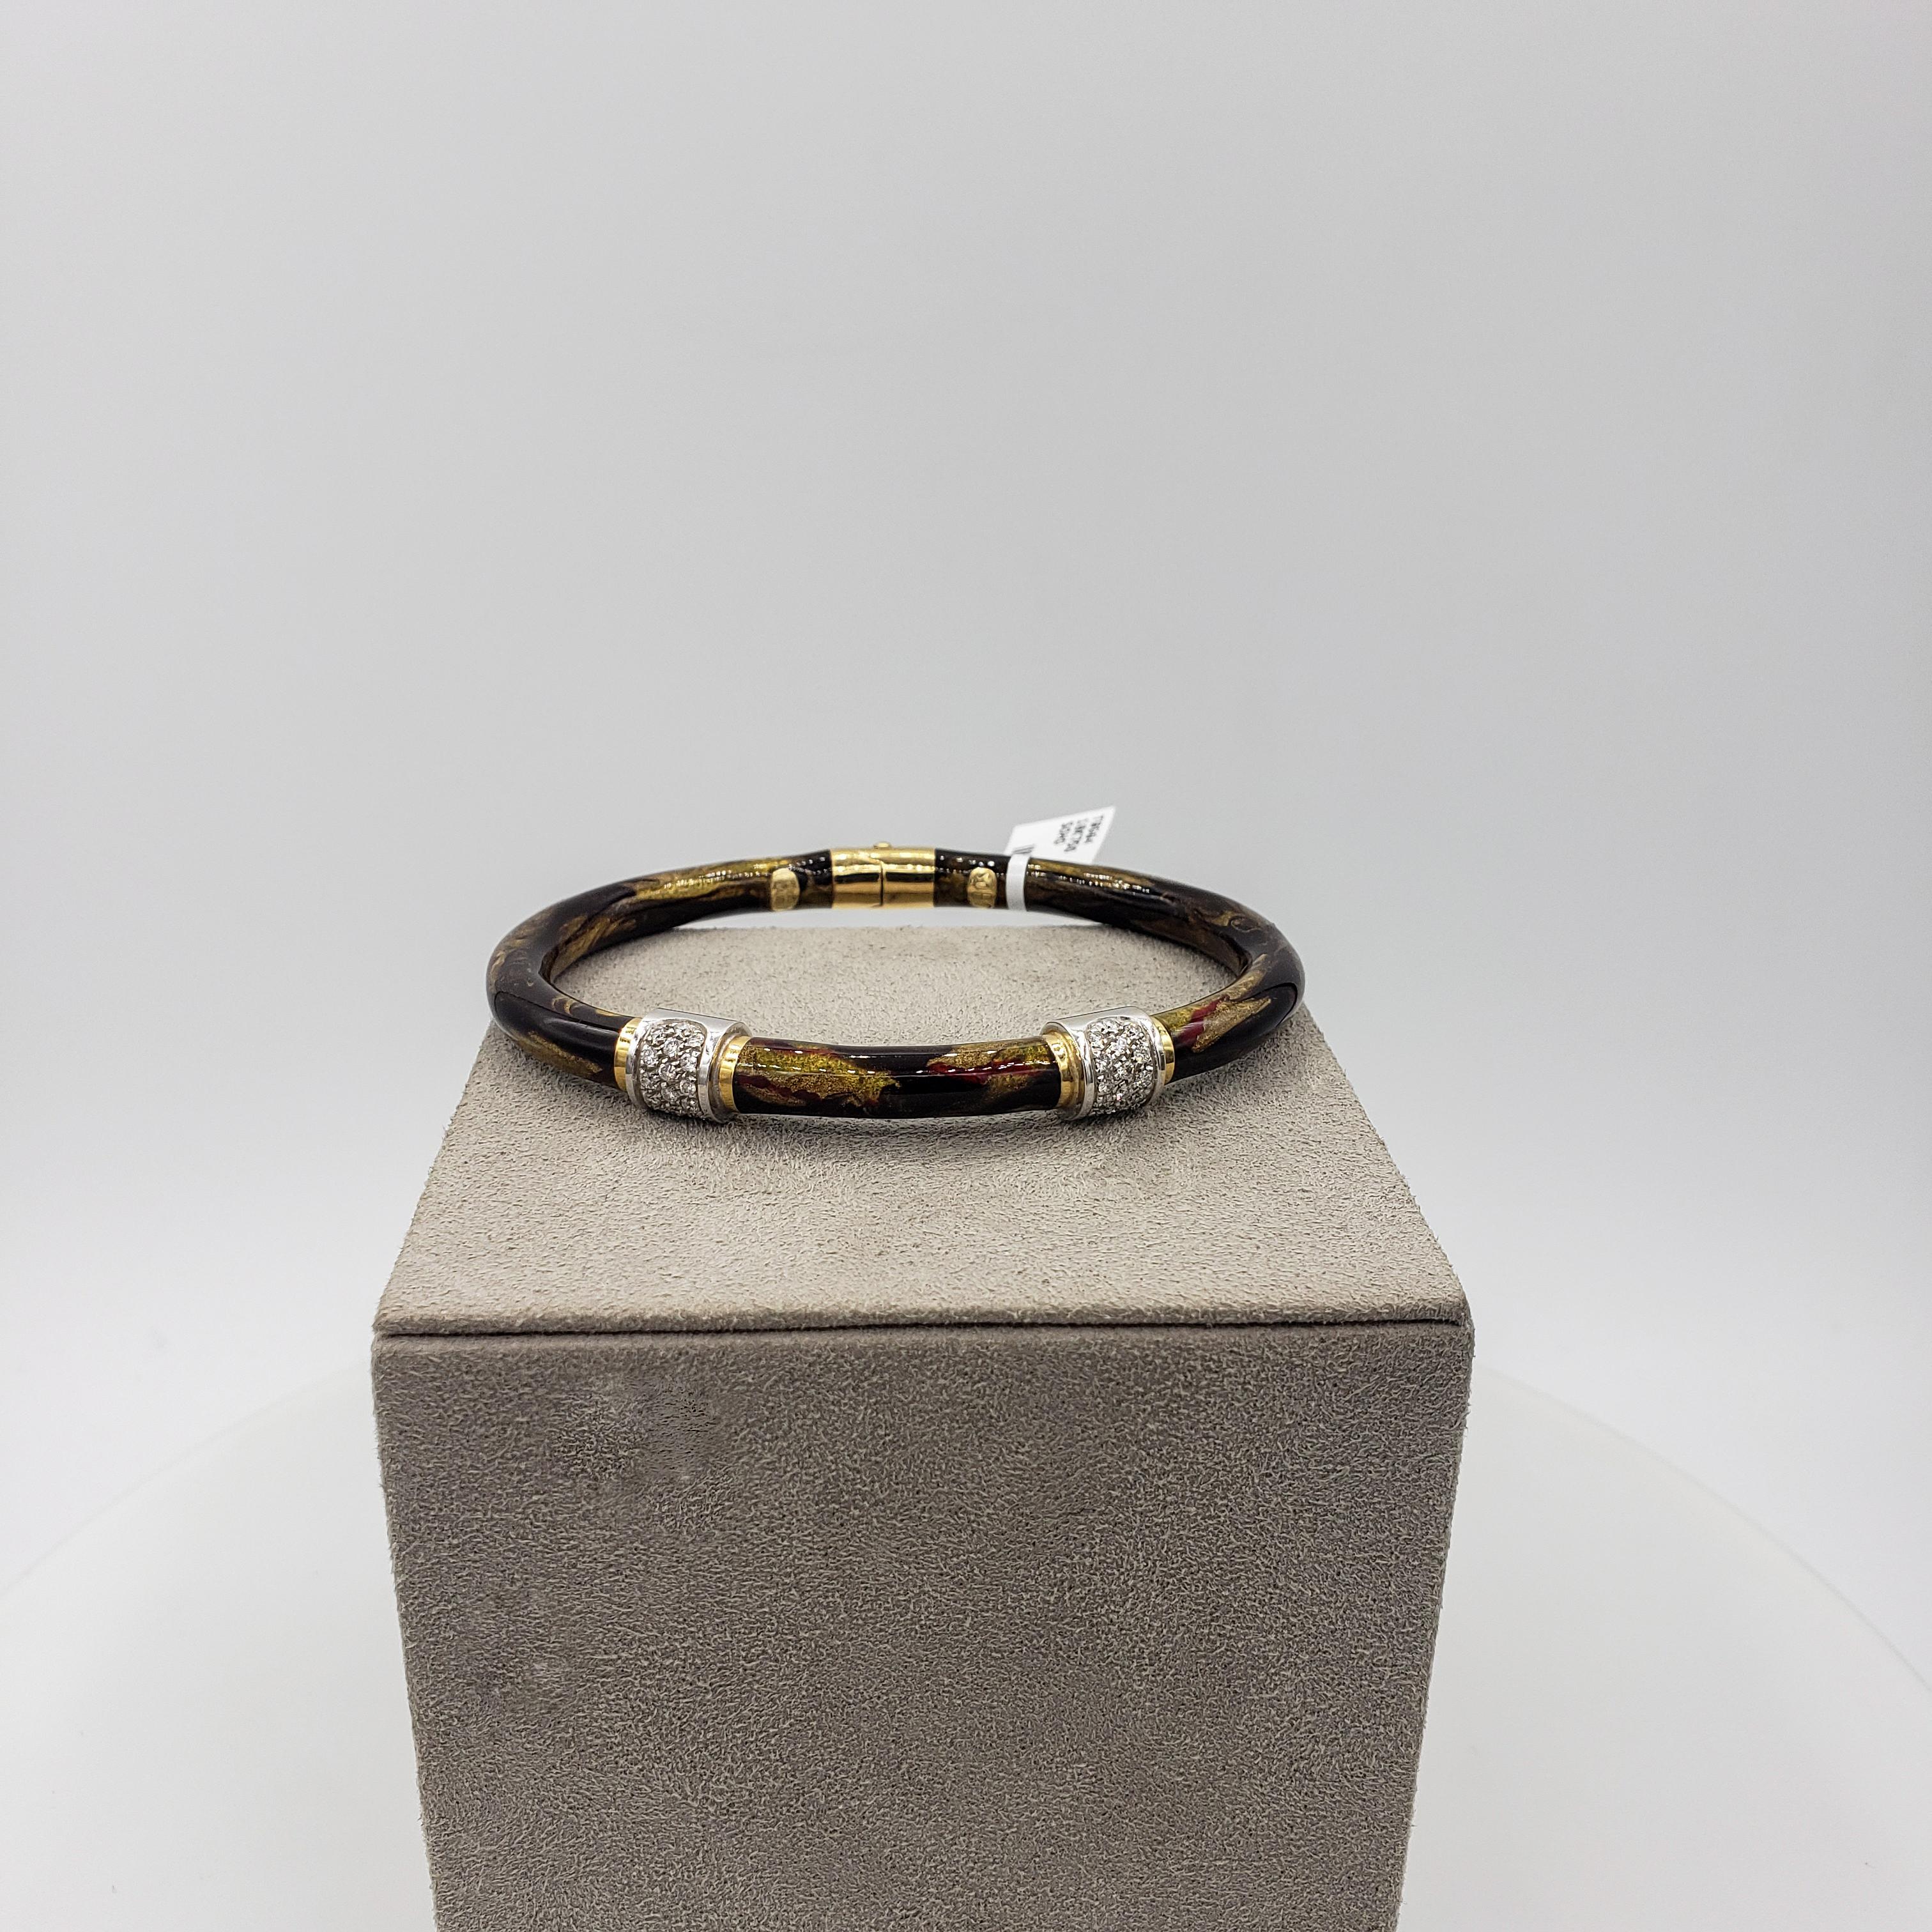 Contemporary Soho Jewelry 18K Yellow Gold, Enamel and Diamond Bangle Bracelet For Sale